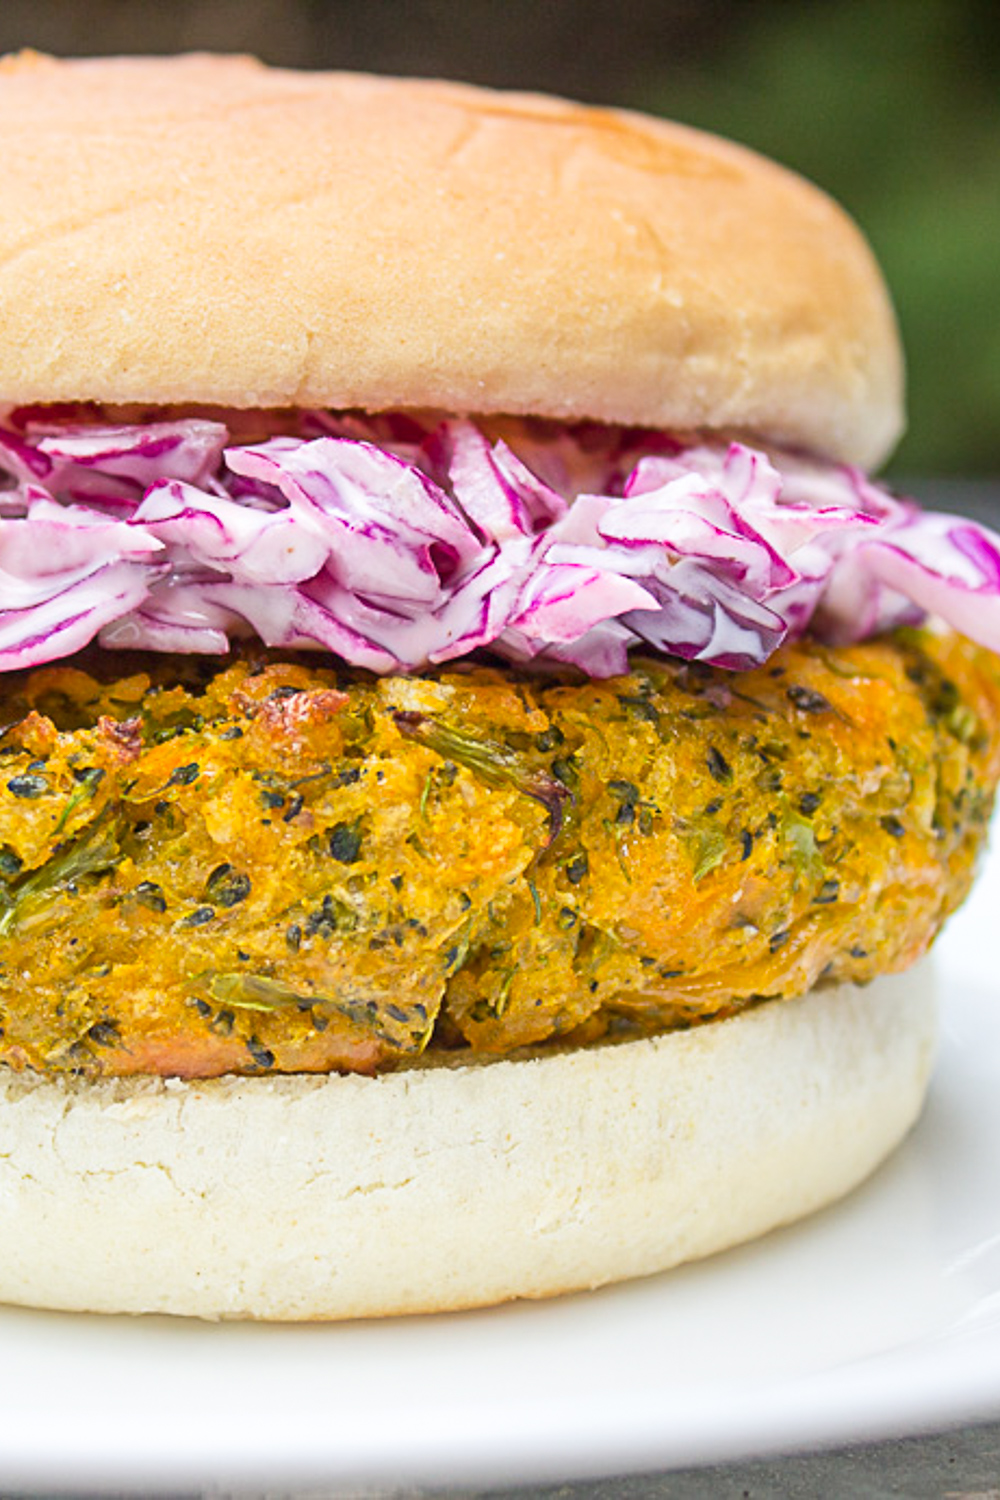 broccoli-burger with purple coleslaw in bun p